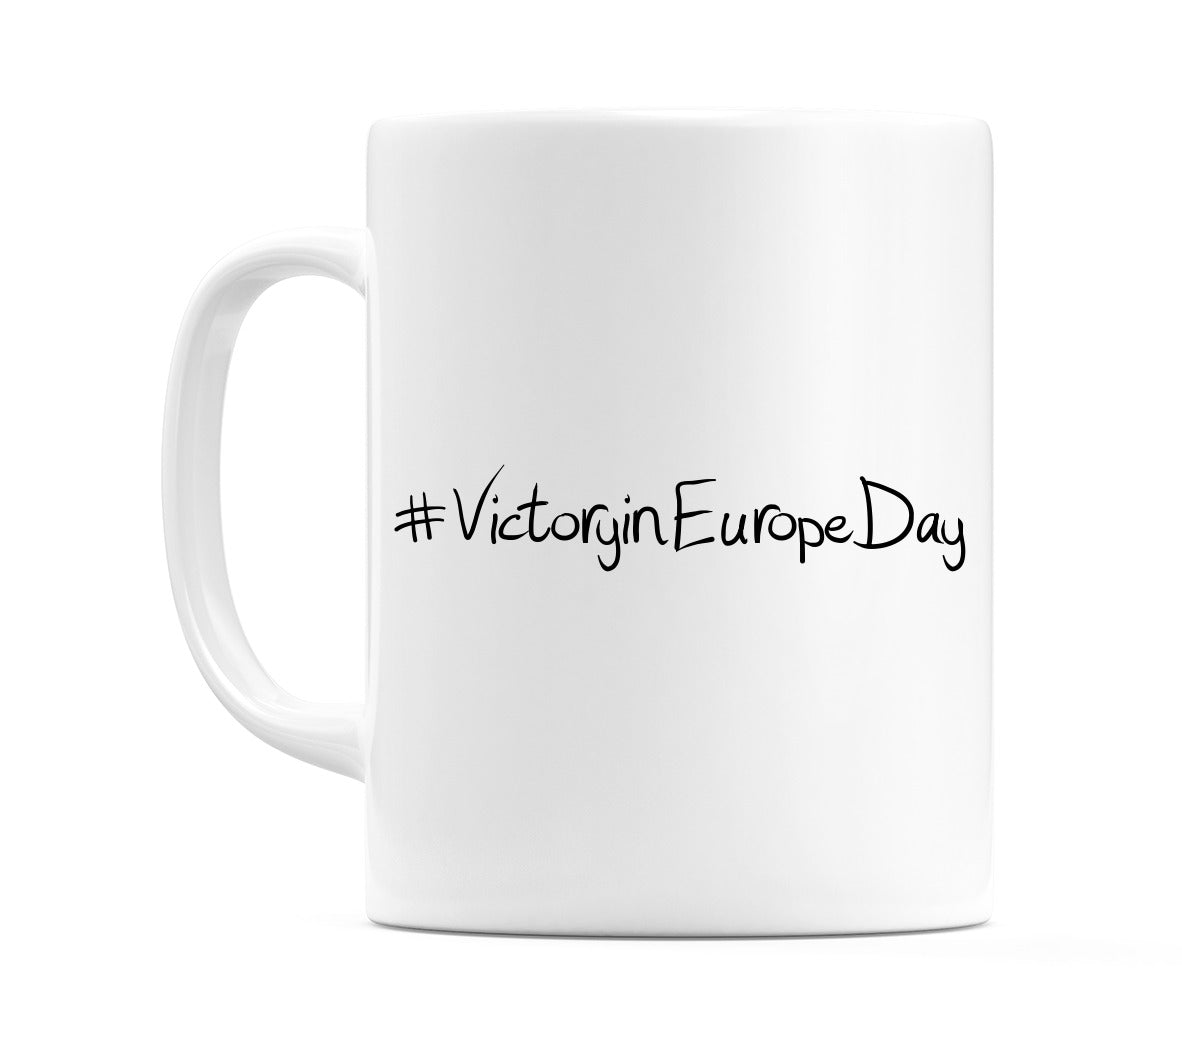 #VictoryinEuropeDay Mug